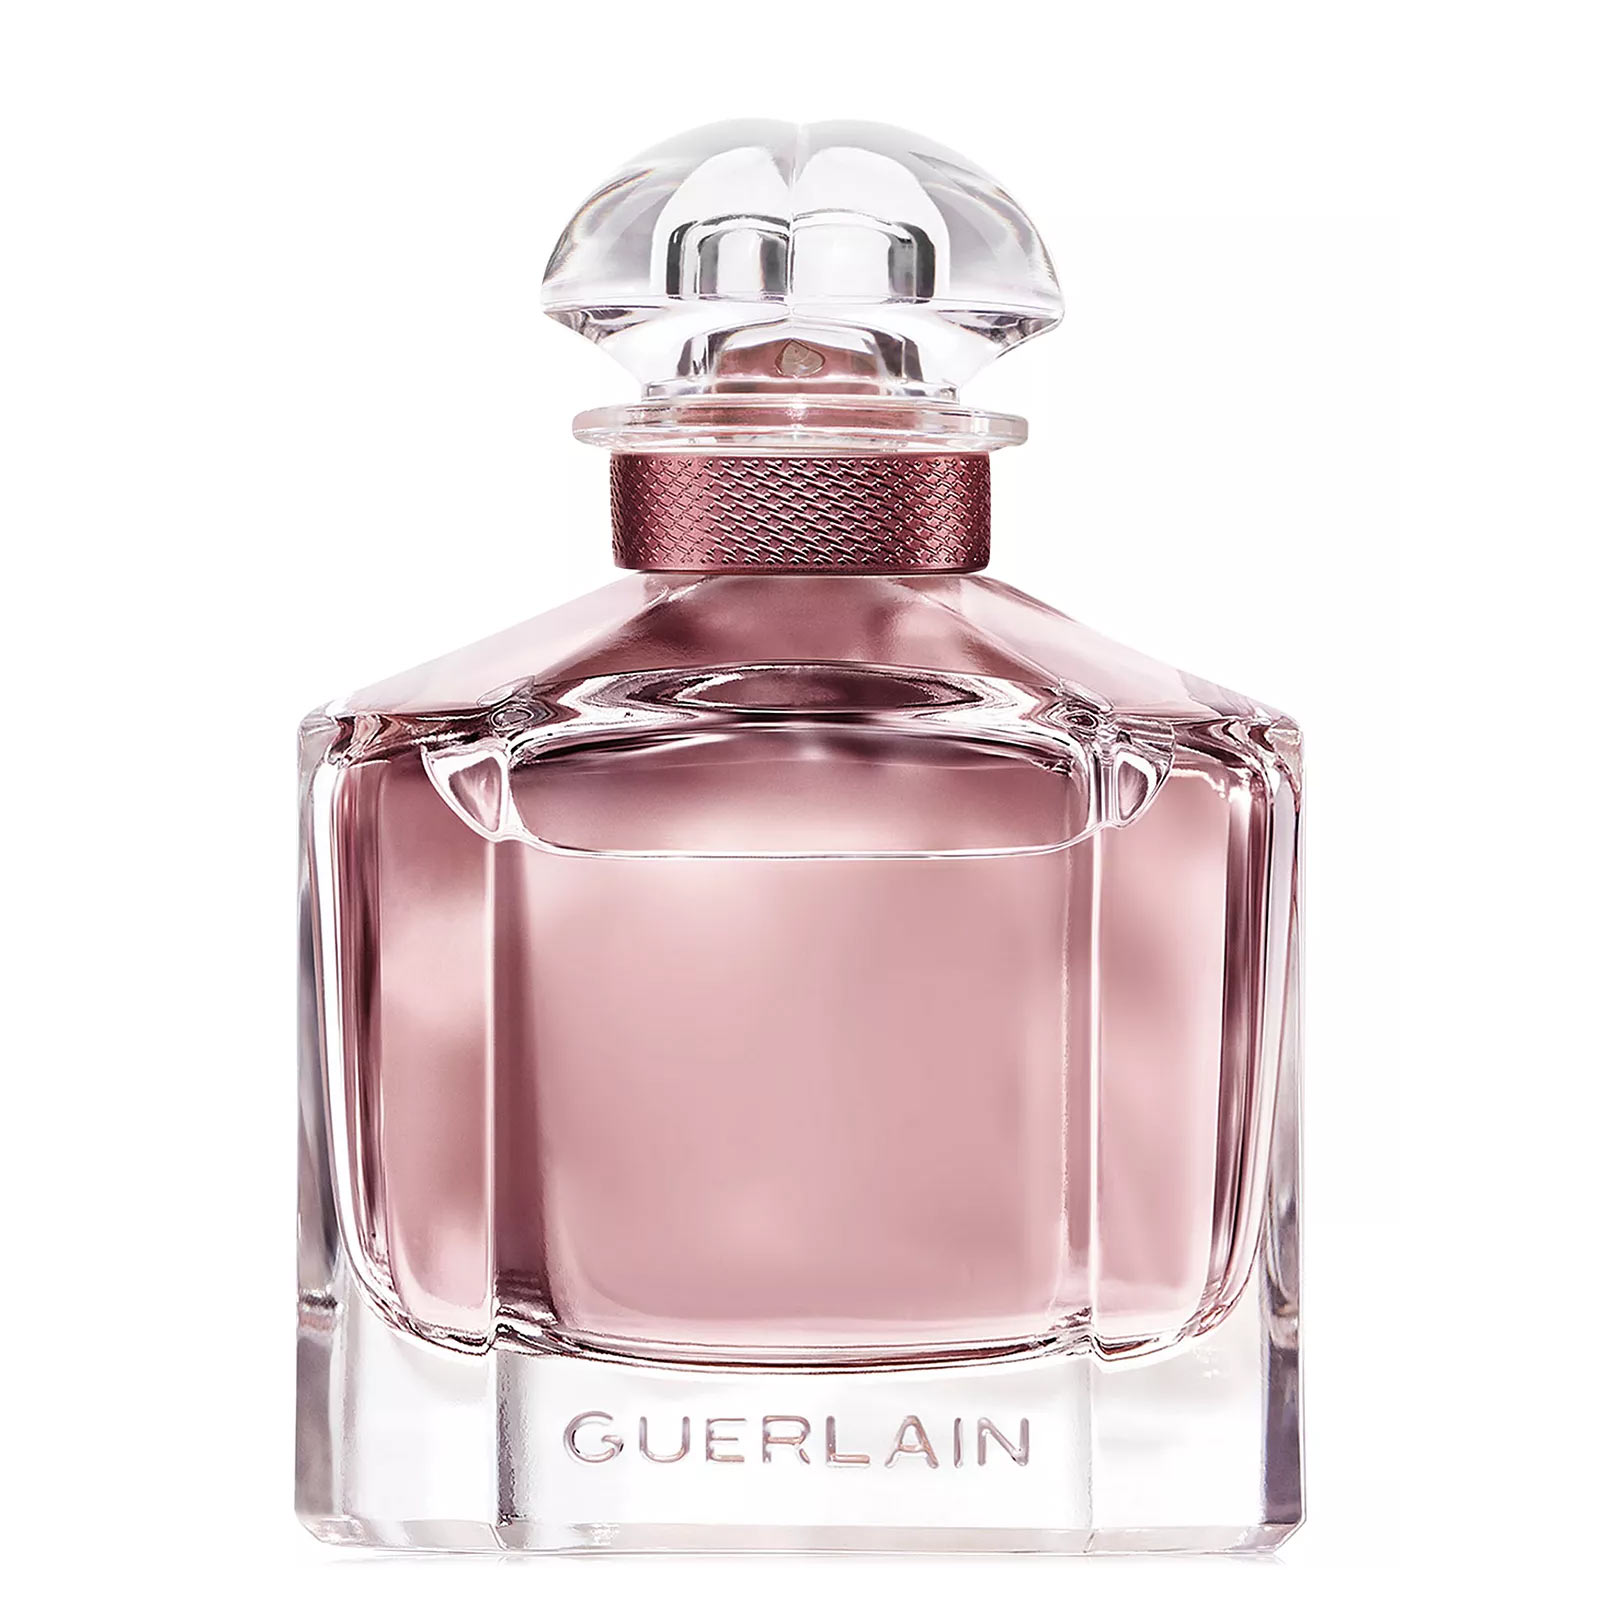 Mon-Guerlain-Eau-de-Parfum-Intense-Guerlain